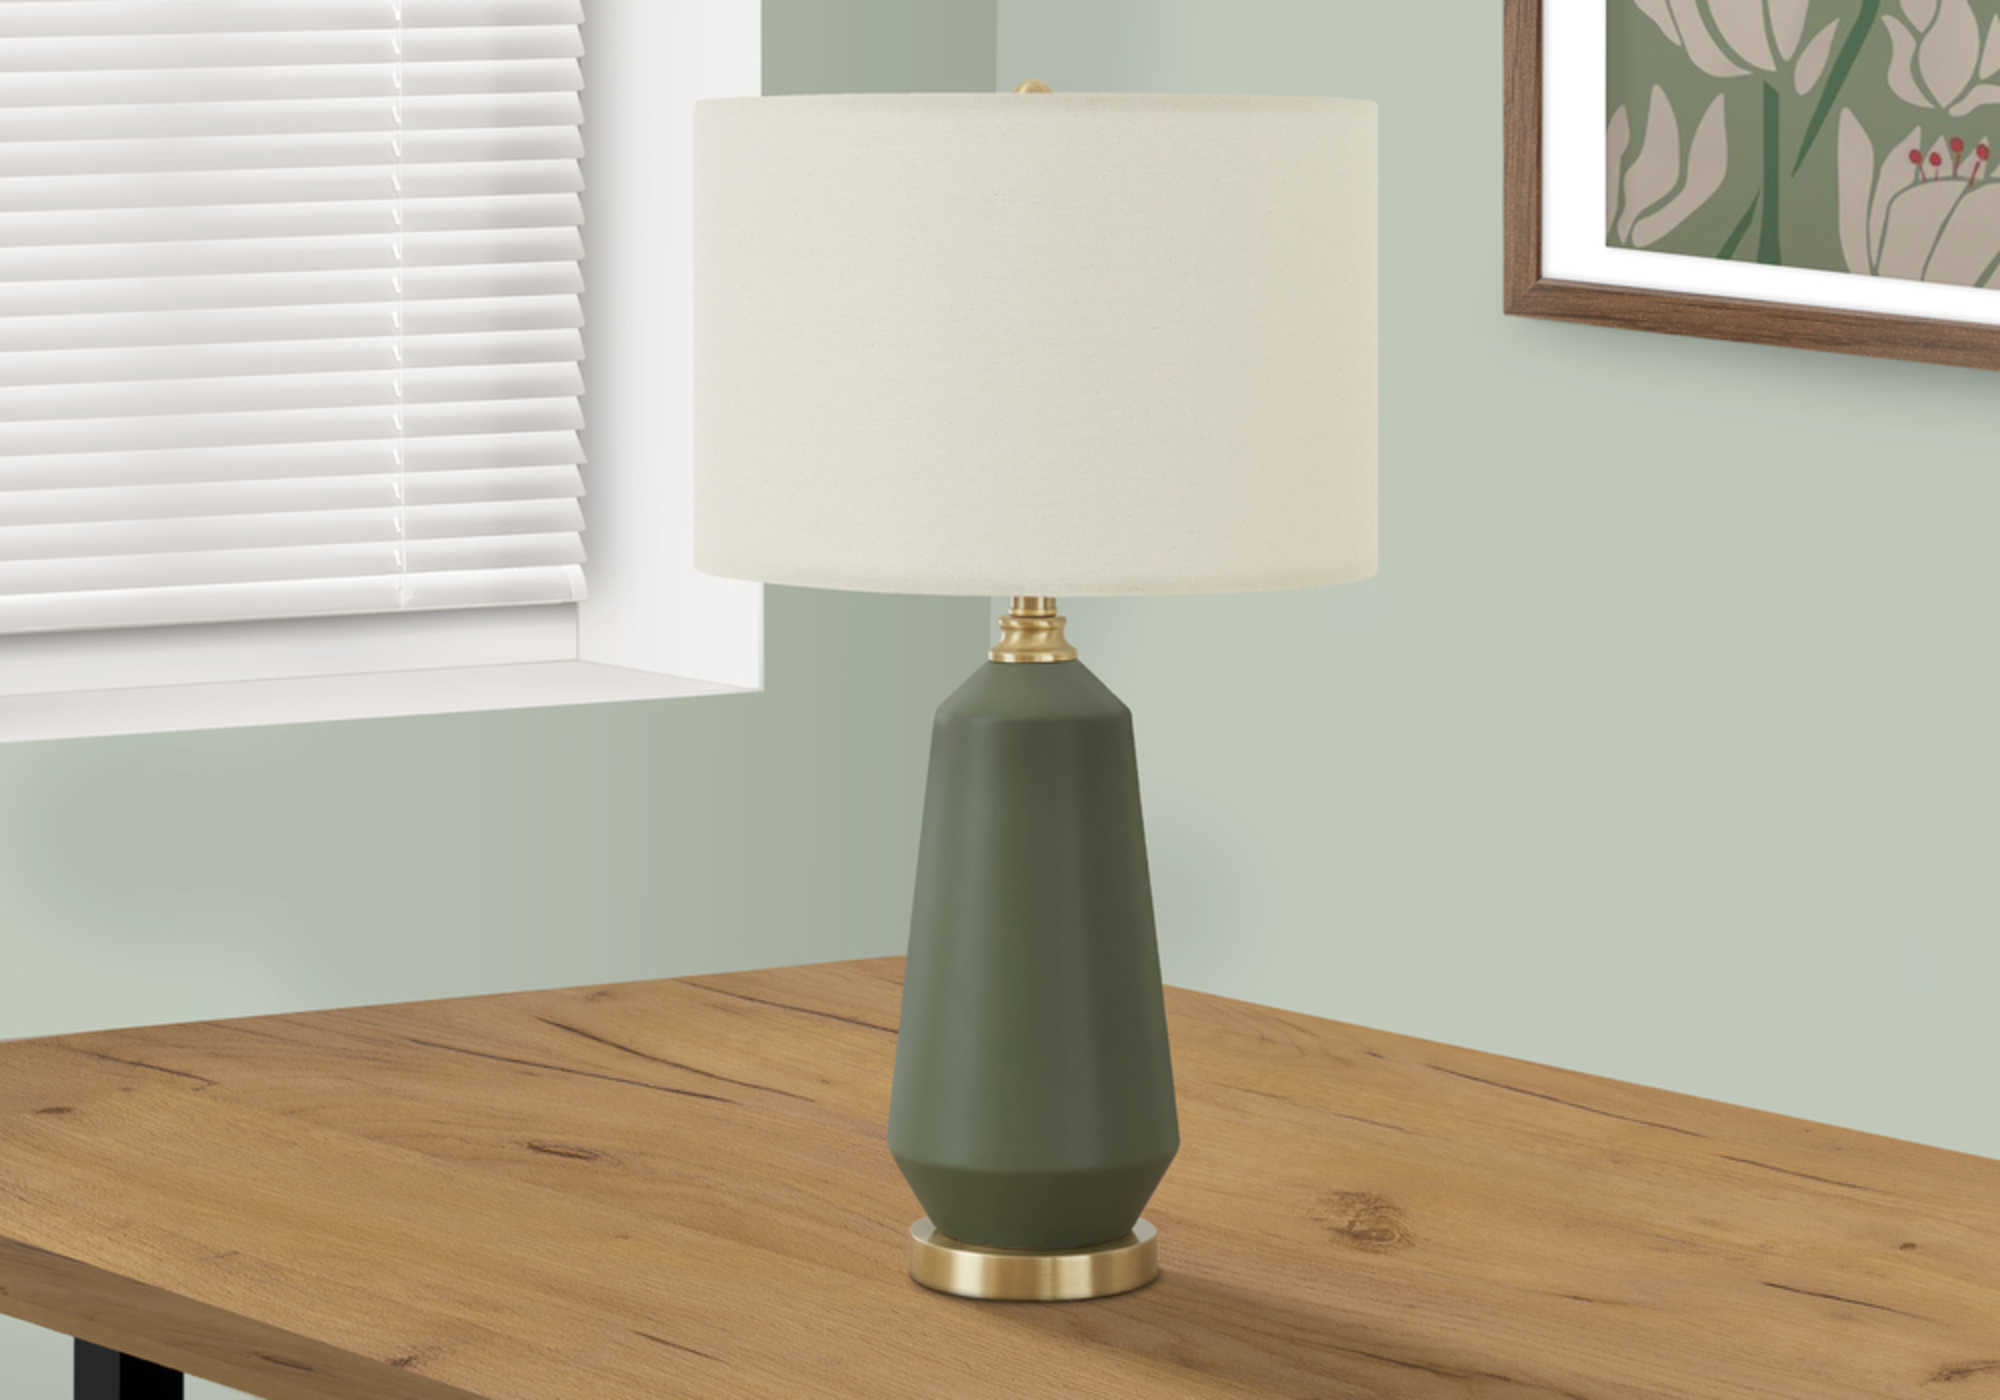 LIGHTING - 26"H TABLE LAMP GREEN CERAMIC / IVORY SHADE